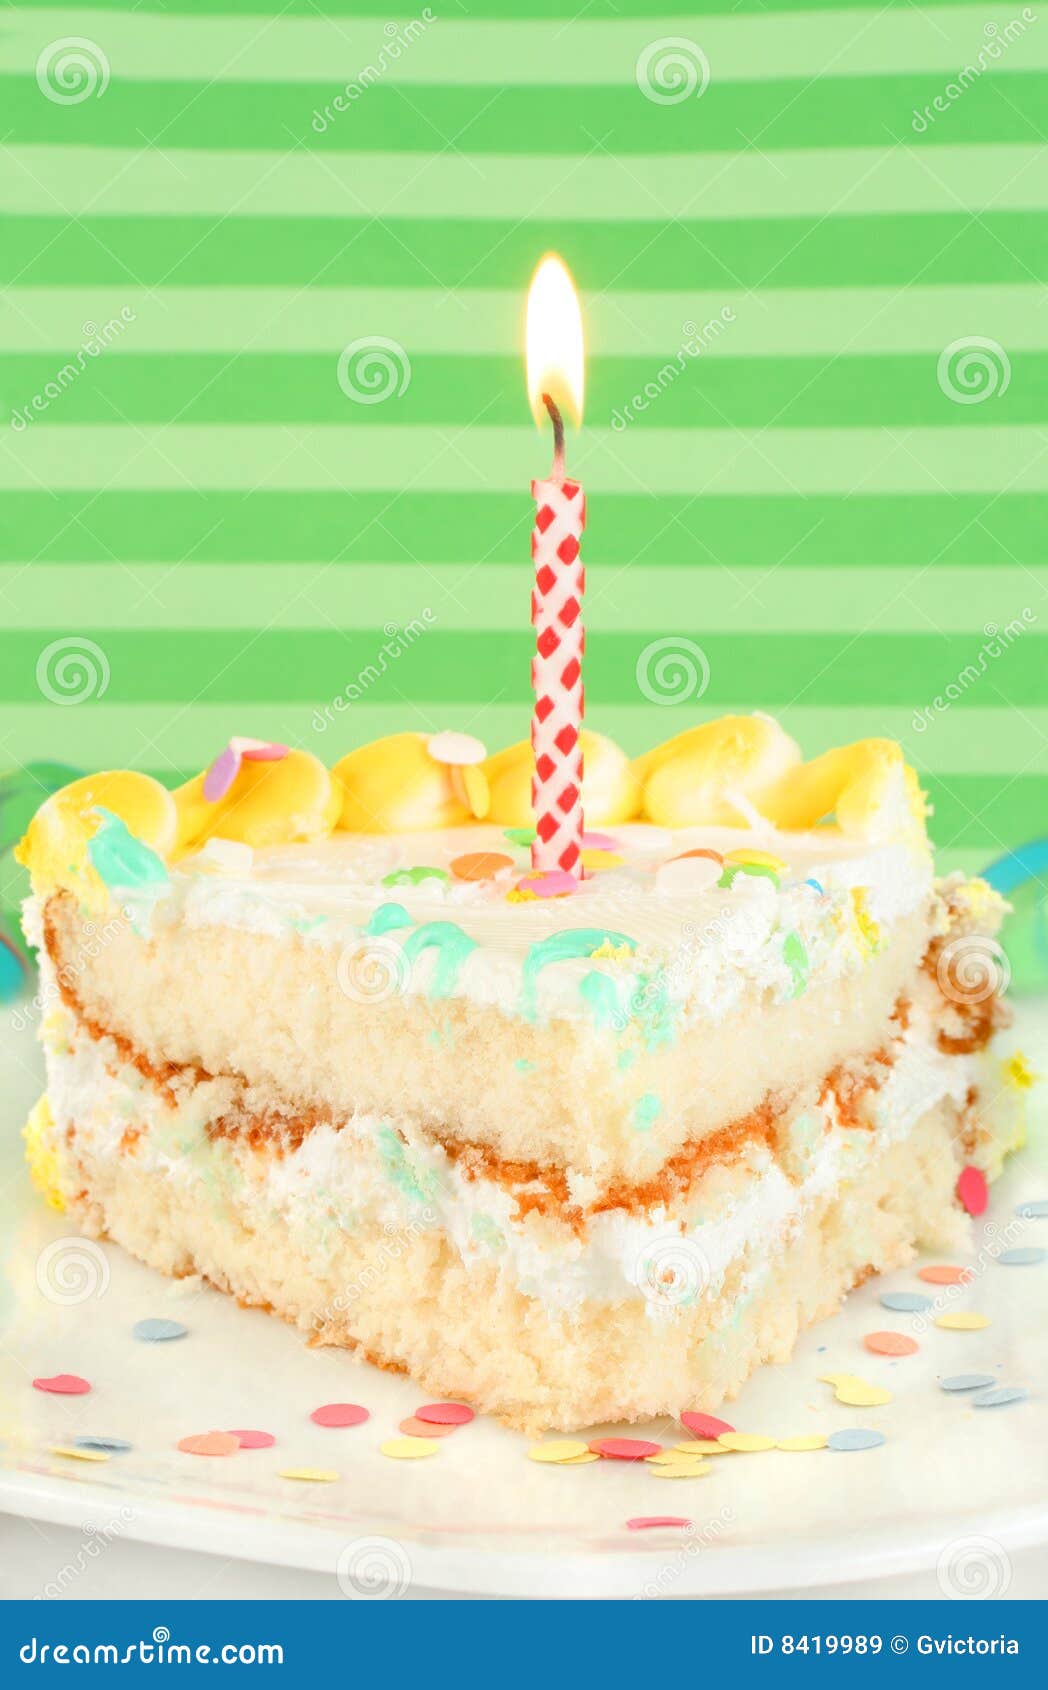 Slice Of Birthday Cake Royalty Free Stock Images - Image: 8419989